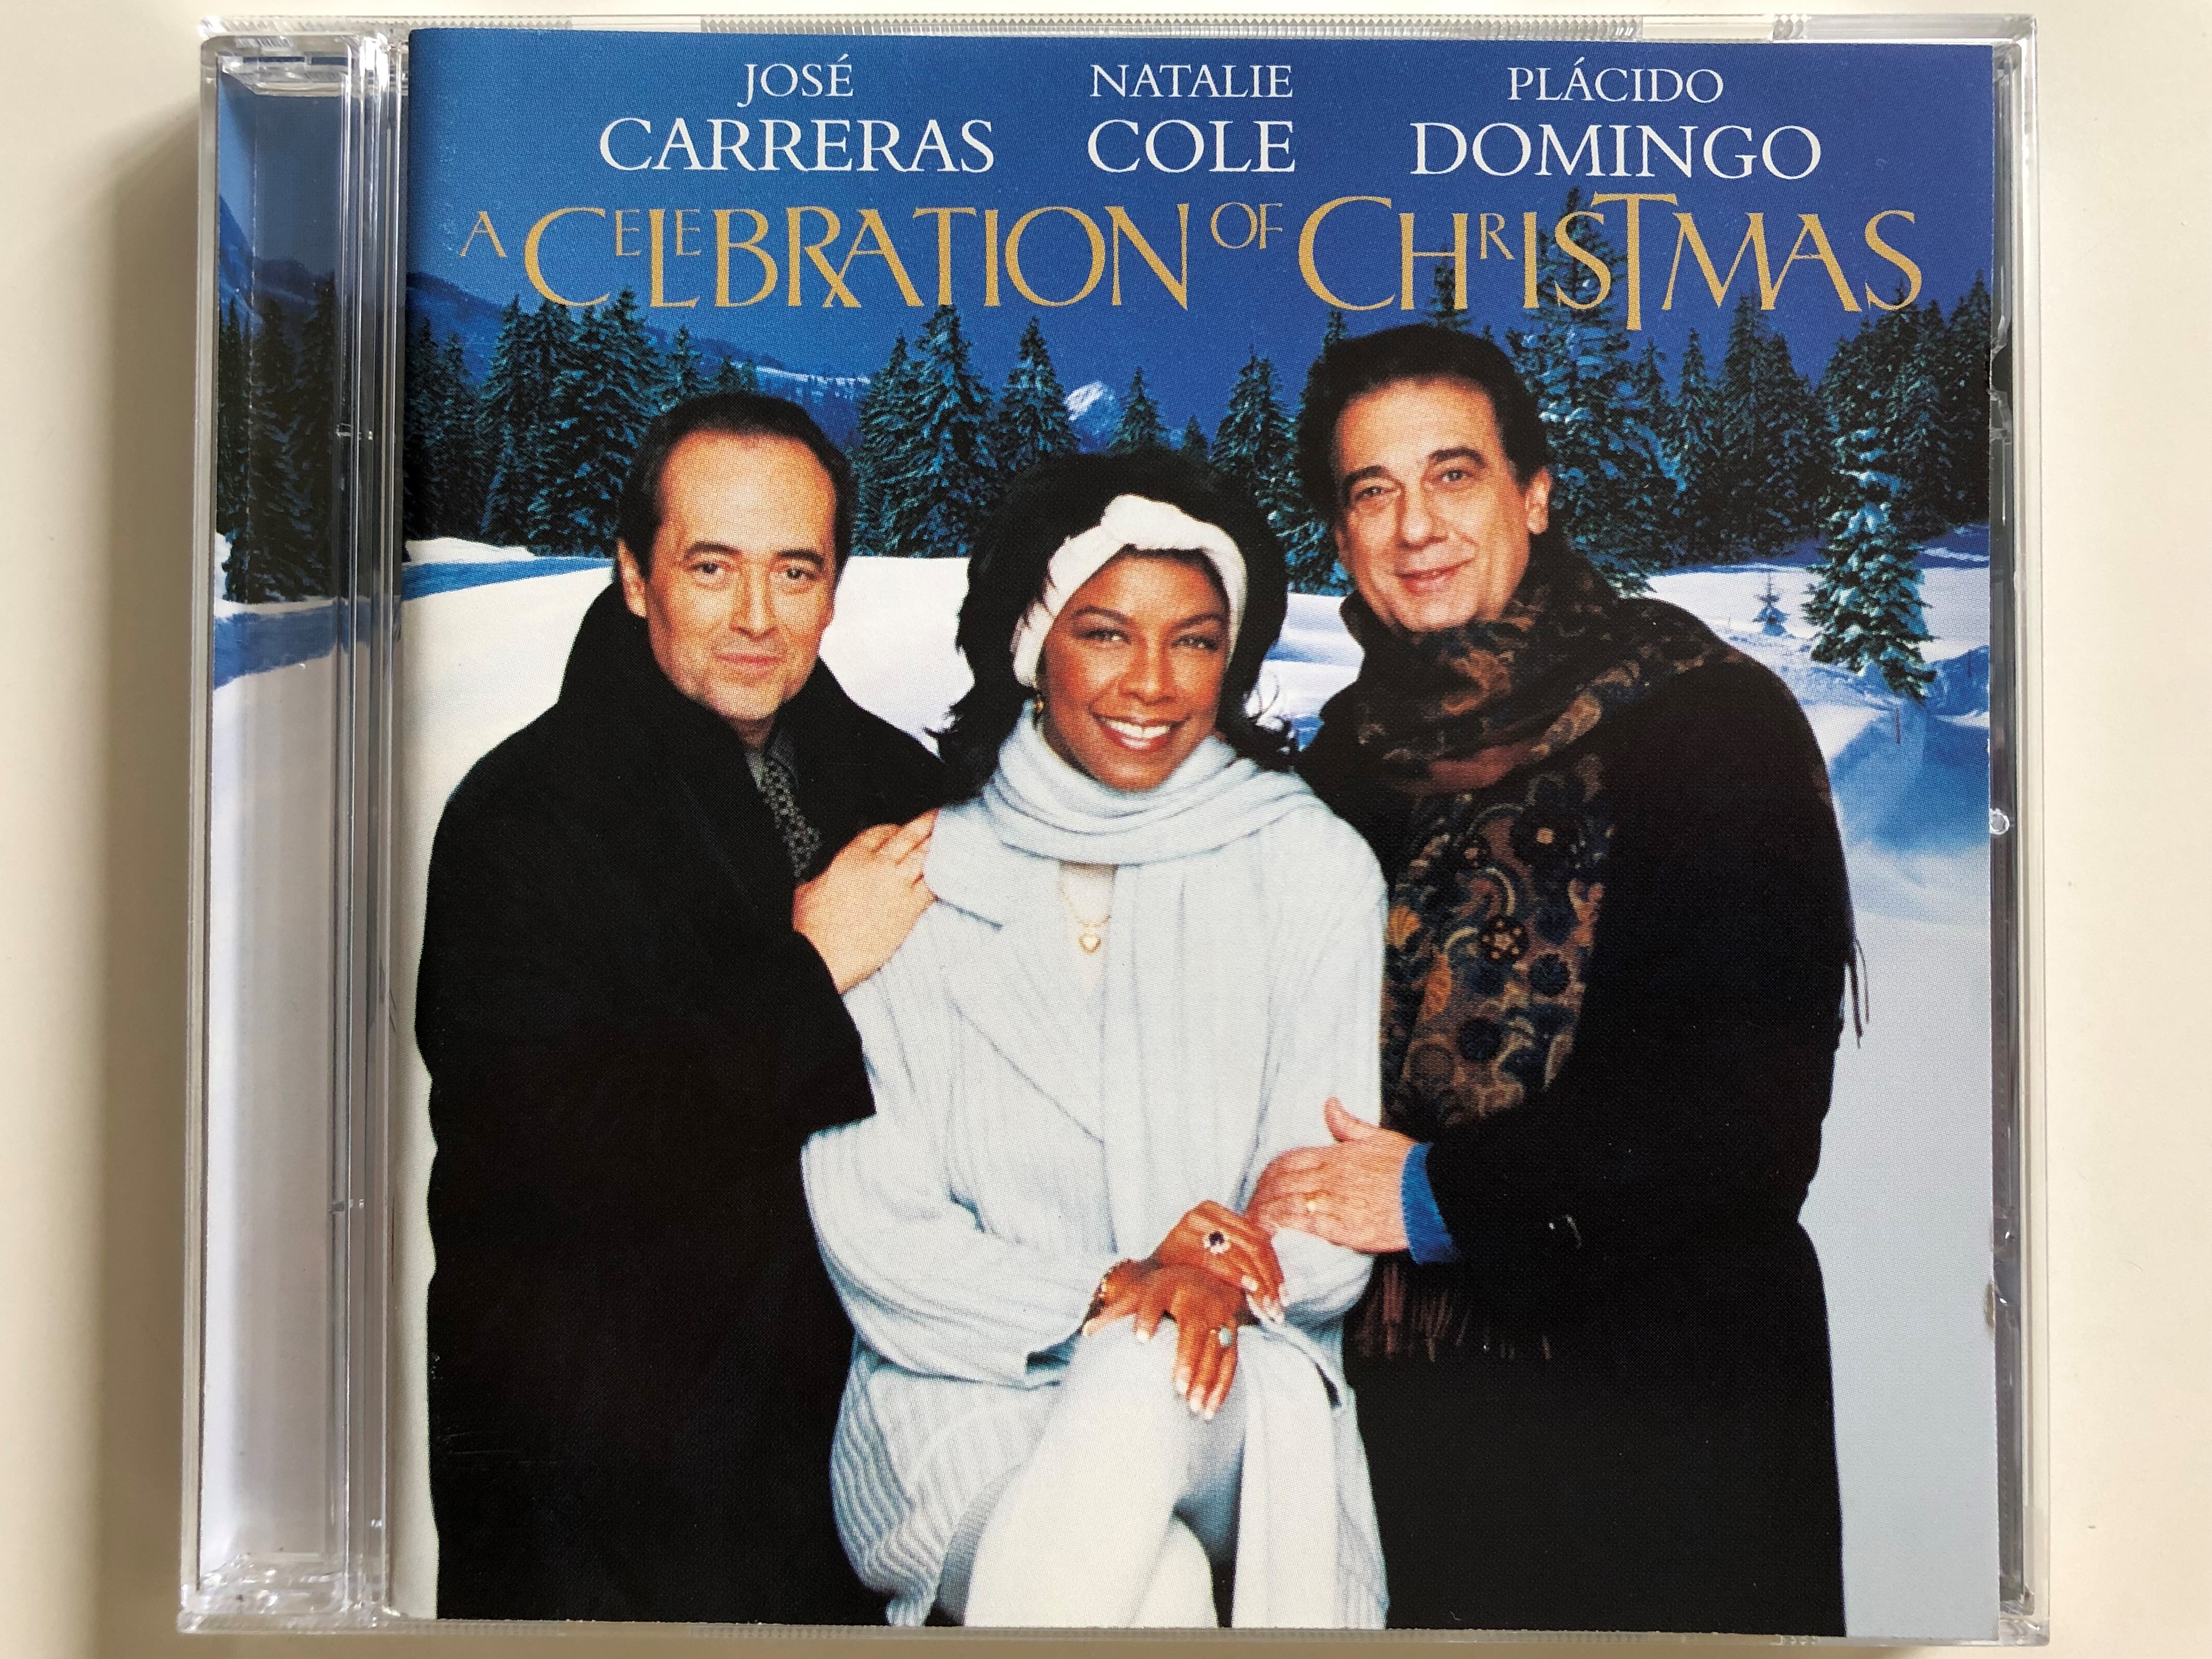 a-celebration-of-christmas-live-from-vienna-jos-carreras-natalie-cole-pl-cido-domingo-audio-cd-1996-erato-warner-1-.jpg